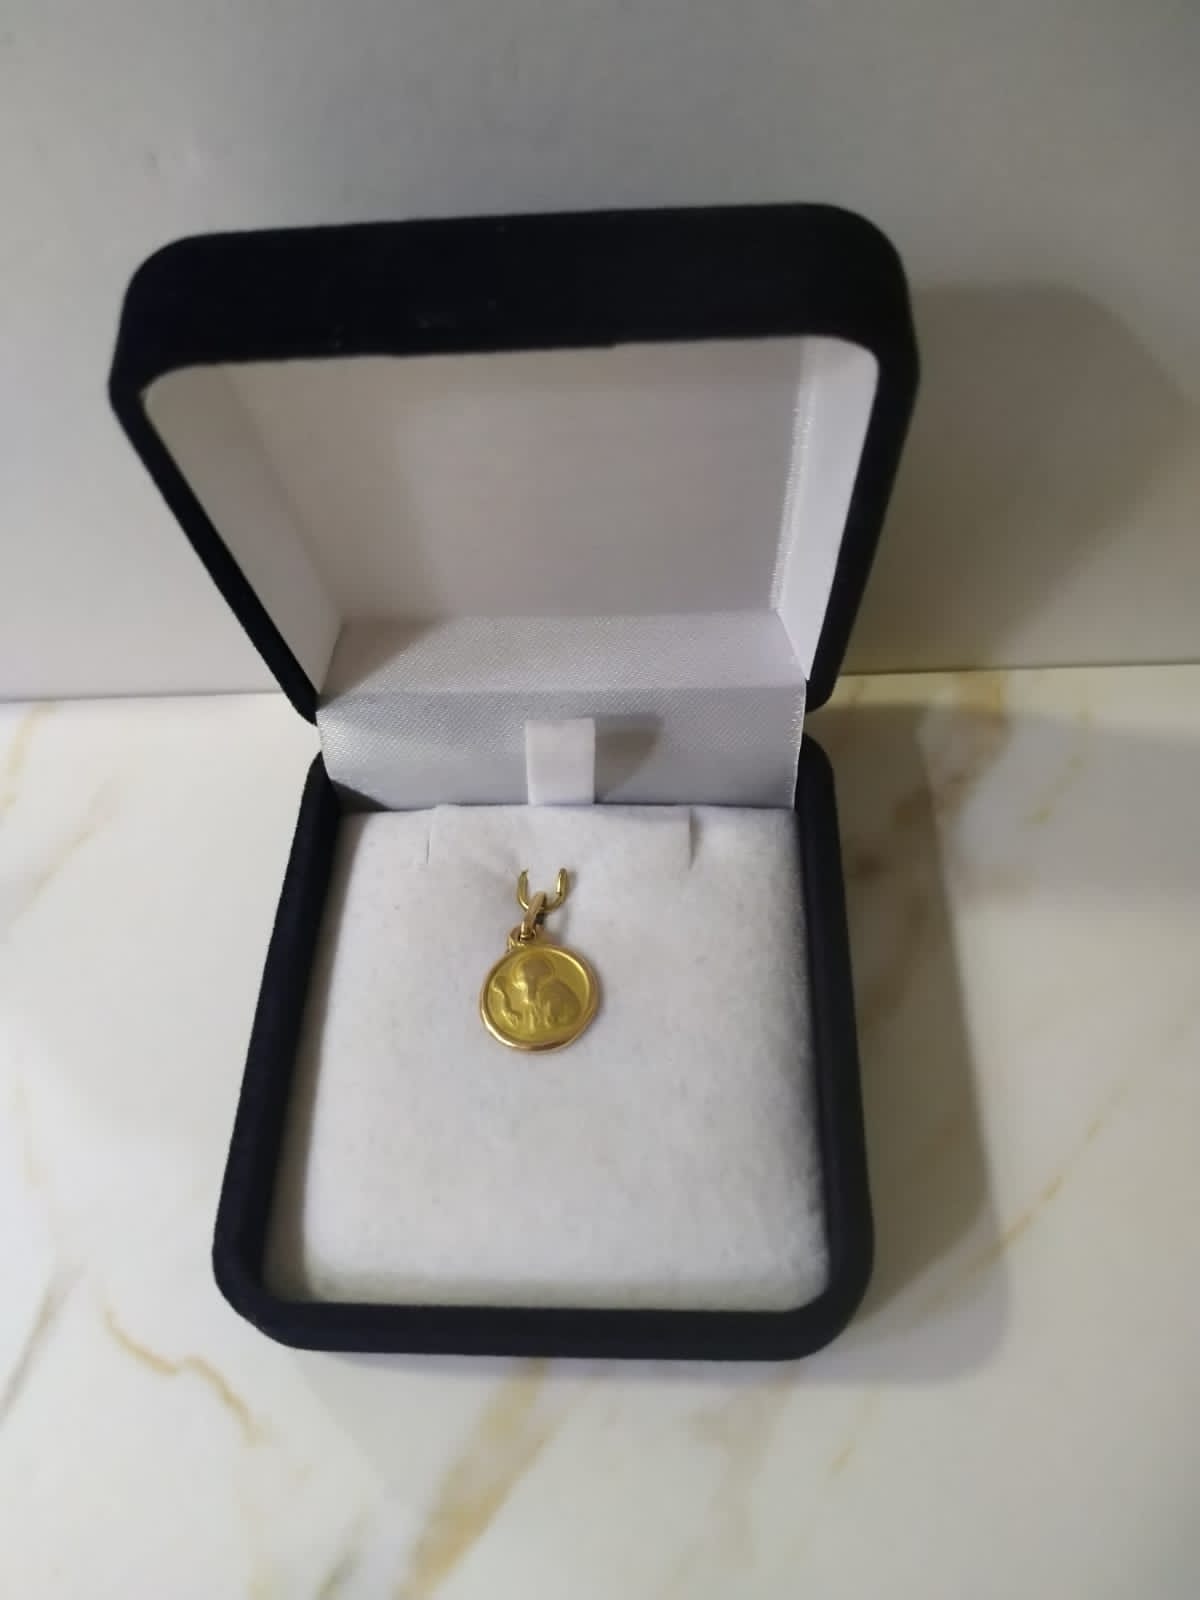 Medalla de San Benito de Oro 10 Kilates - Precios Mayoreo